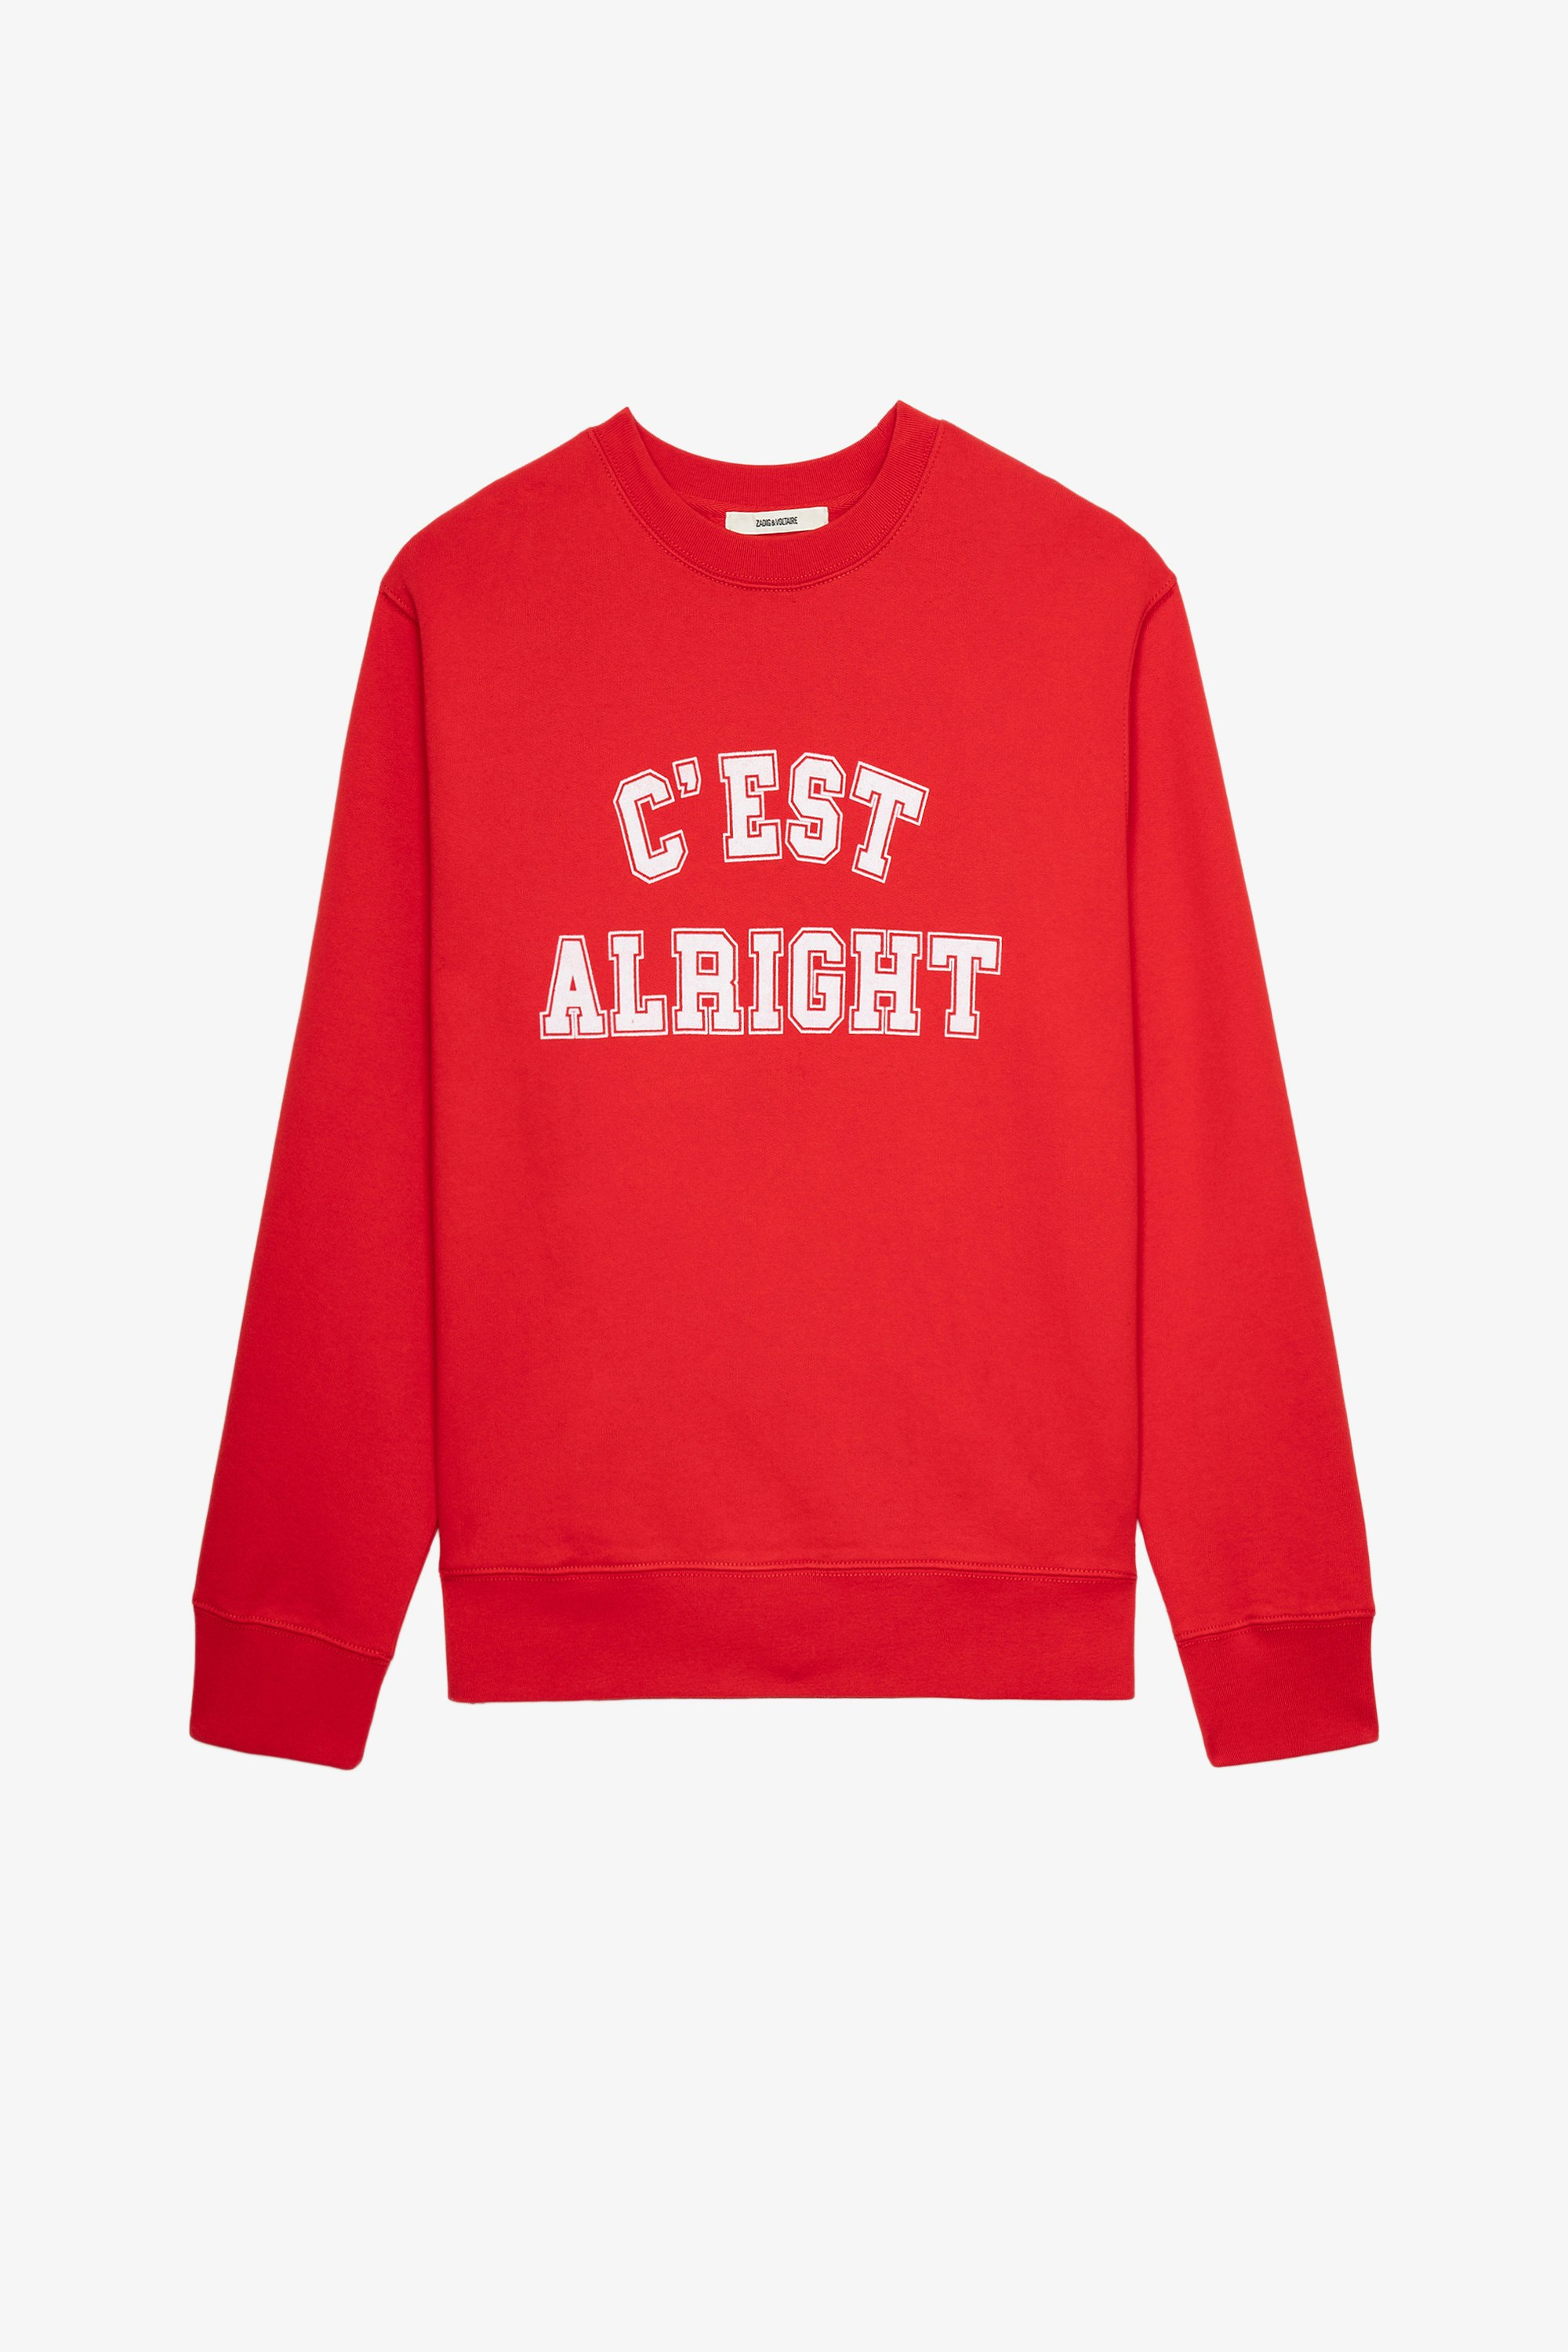 College Simba スウェット Men’s orange cotton ‘C’est alright’ sweatshirt